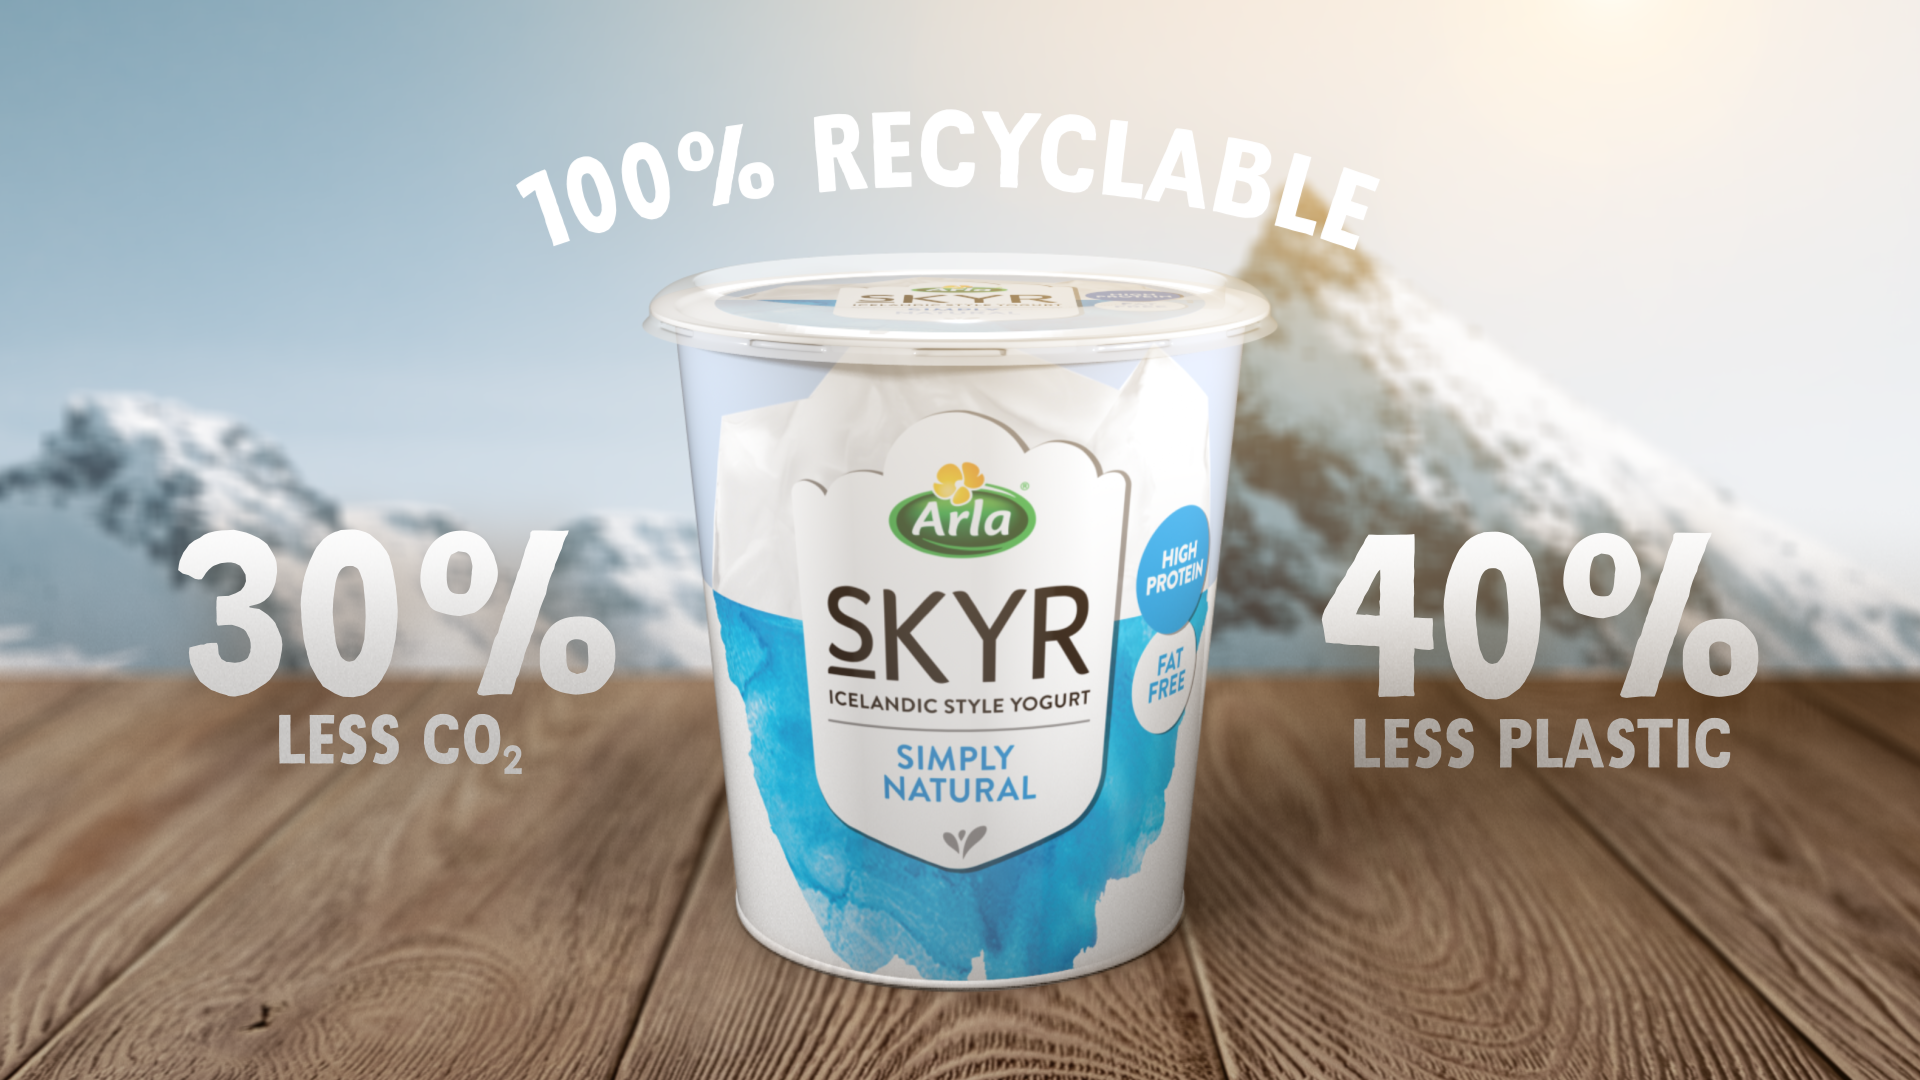 percent plastic Arla by bucket | New skyr reduces 40